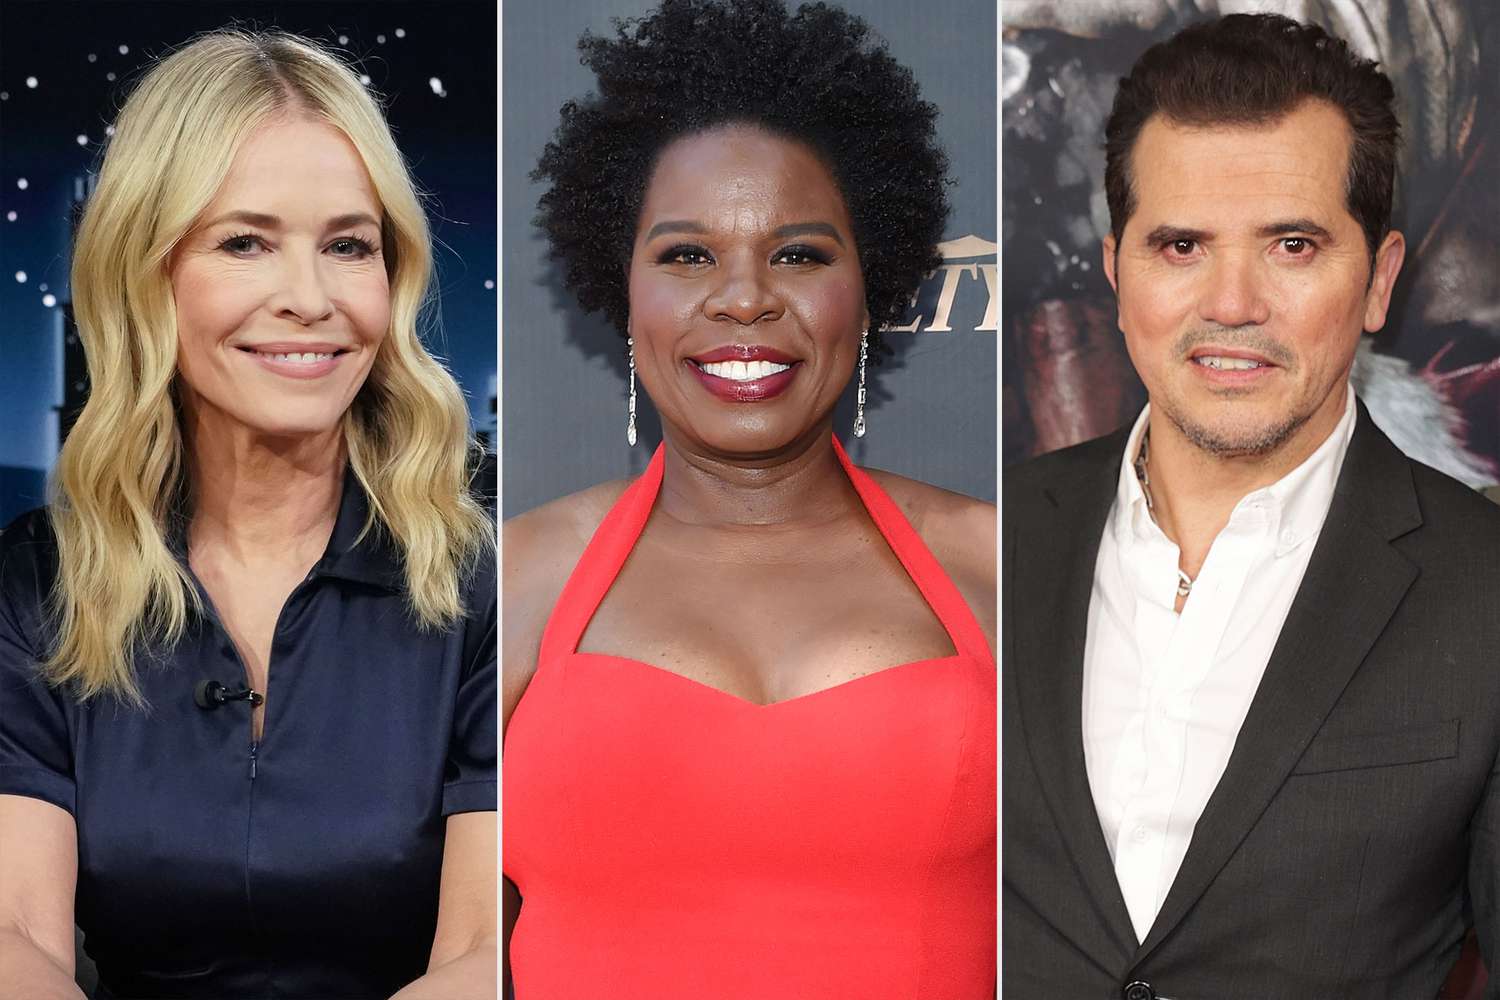 Chelsea Handler, Leslie Jones, and John Leguizamo will guest host the Daily Show